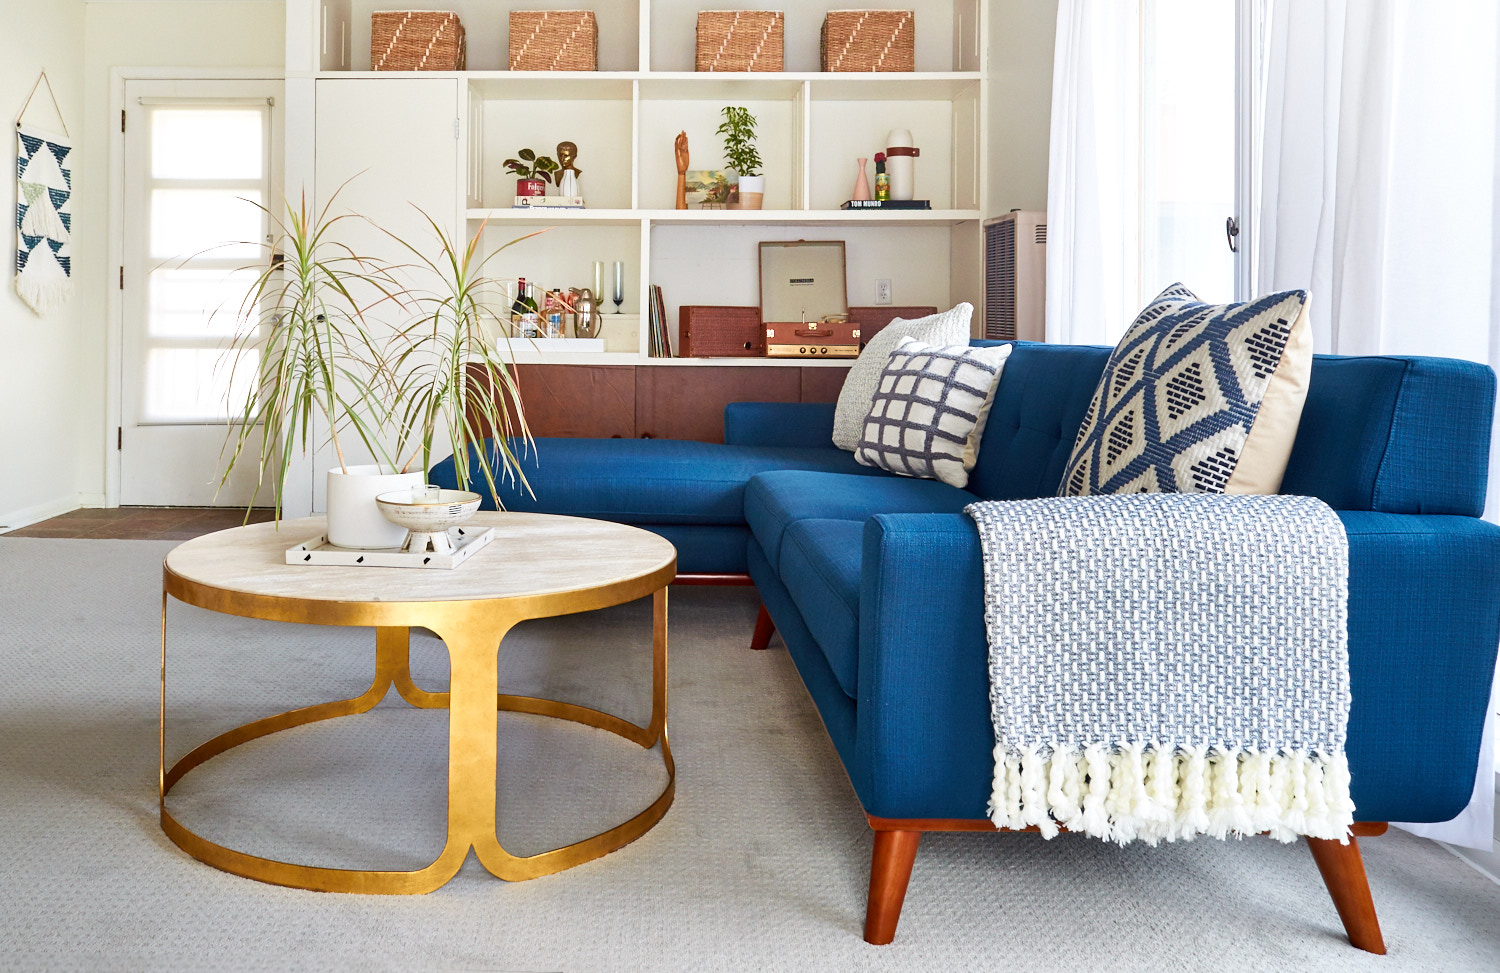 Curbly living room reveal. Shaw LifeHappens carpet.